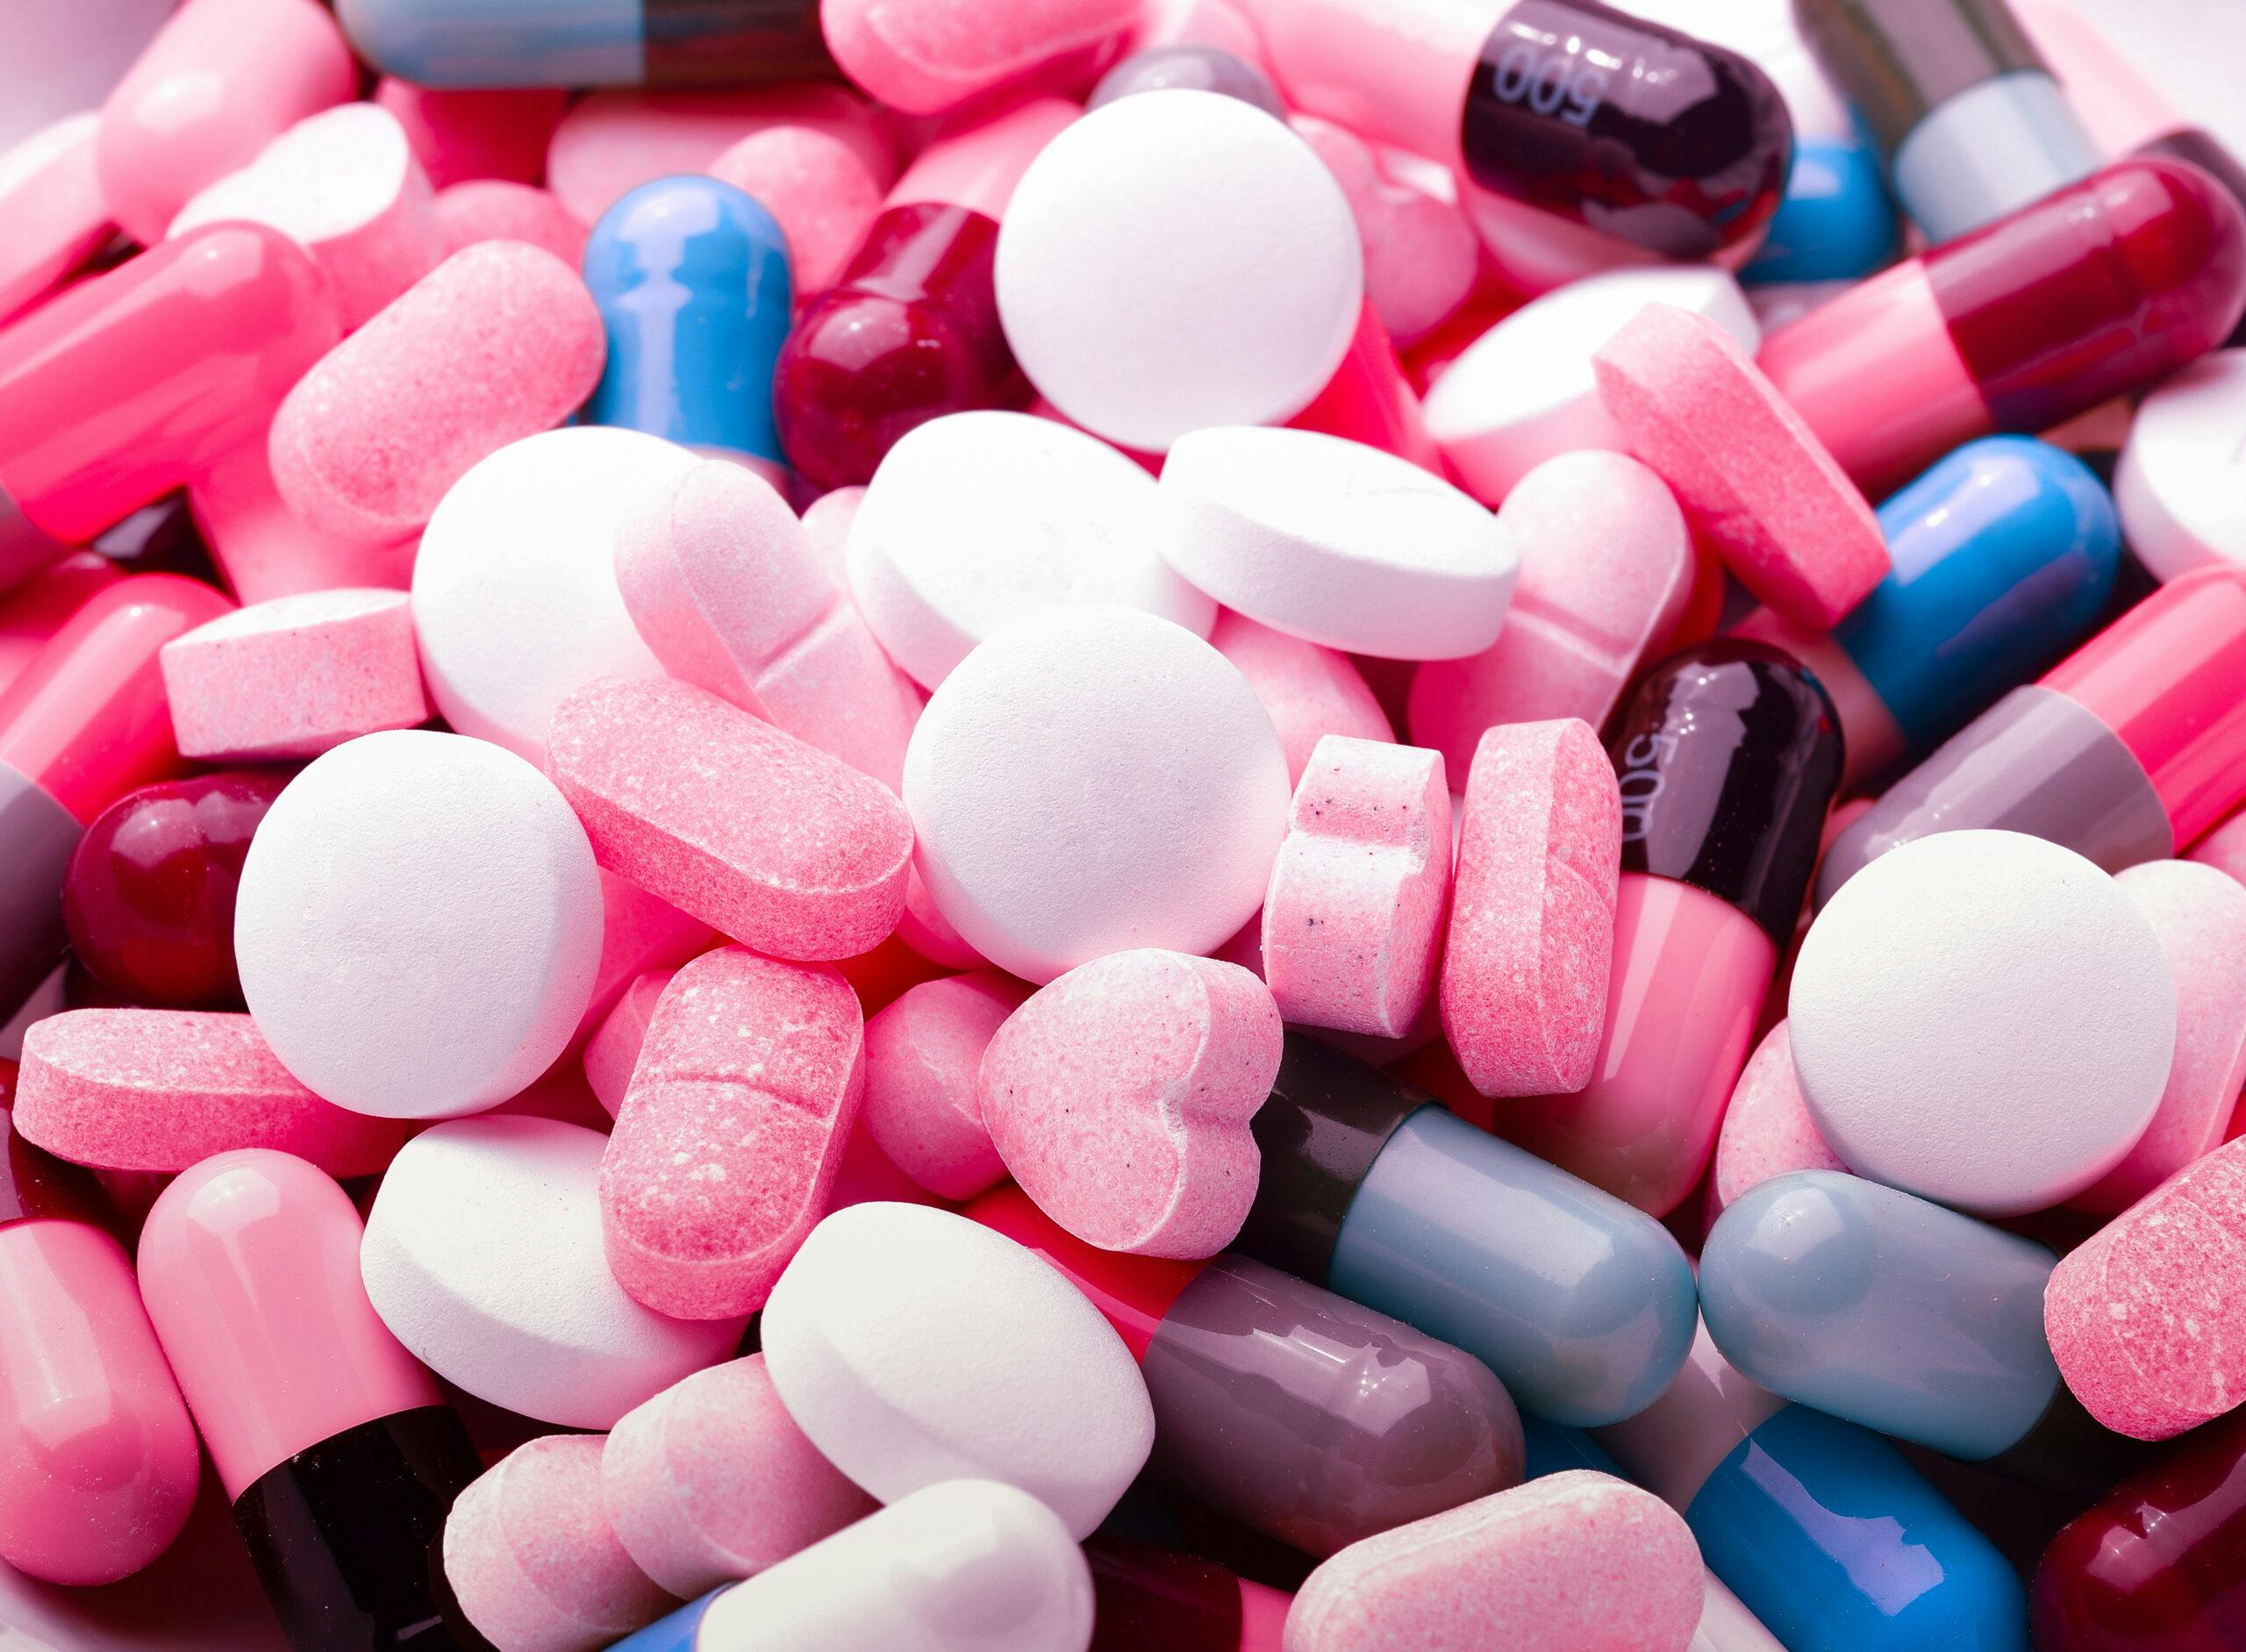 mdma ecstasy pills and capsules